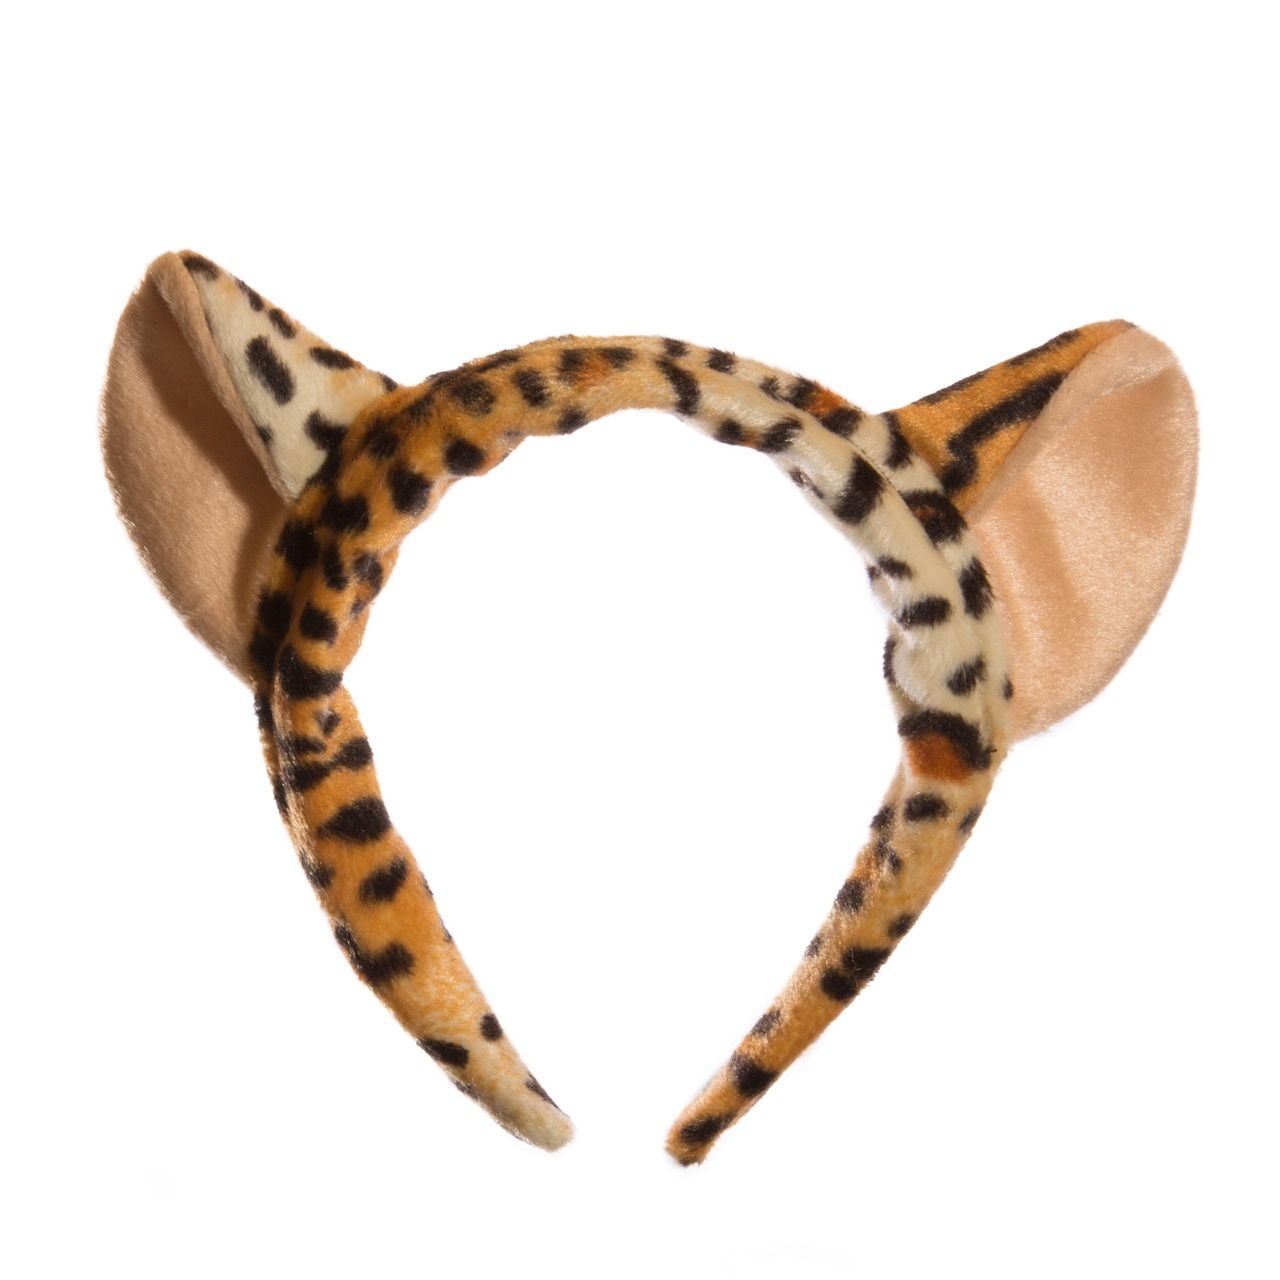 Wildlife Tree Plush Cheetah Ears Headband Accessory For Cheetah Costume Cosplay Pretend Animal Play Or Safari Party Costumes Walmart Com Walmart Com